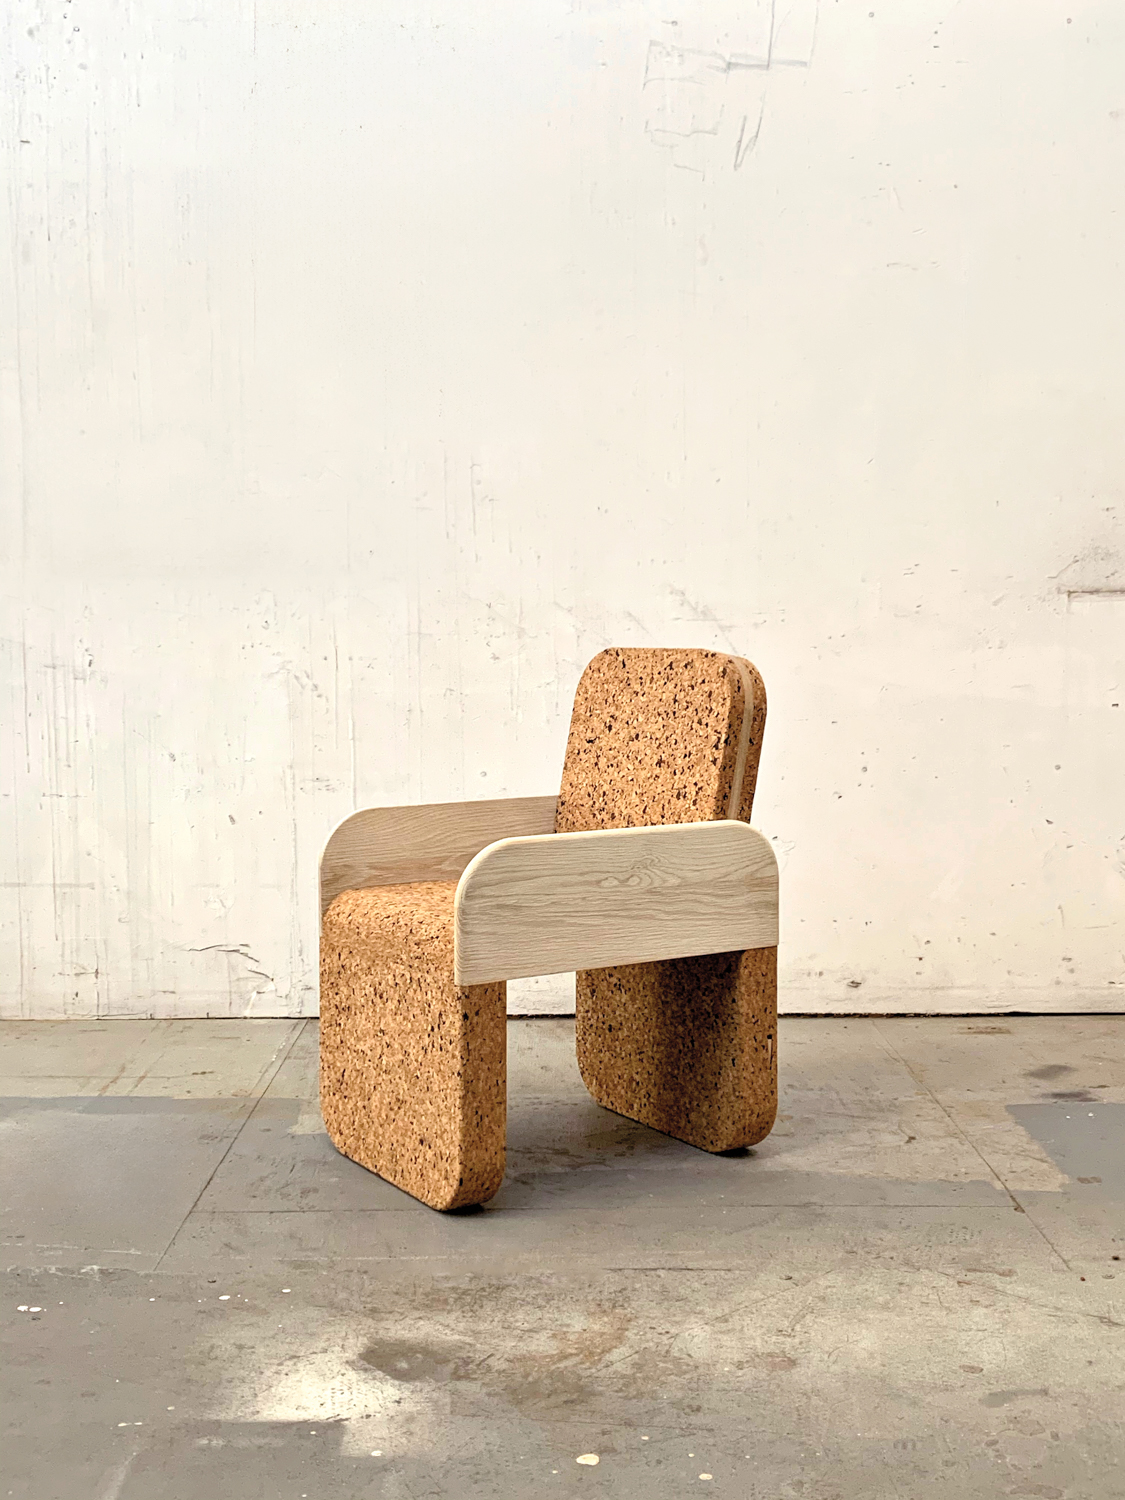 cork chair against neutral background